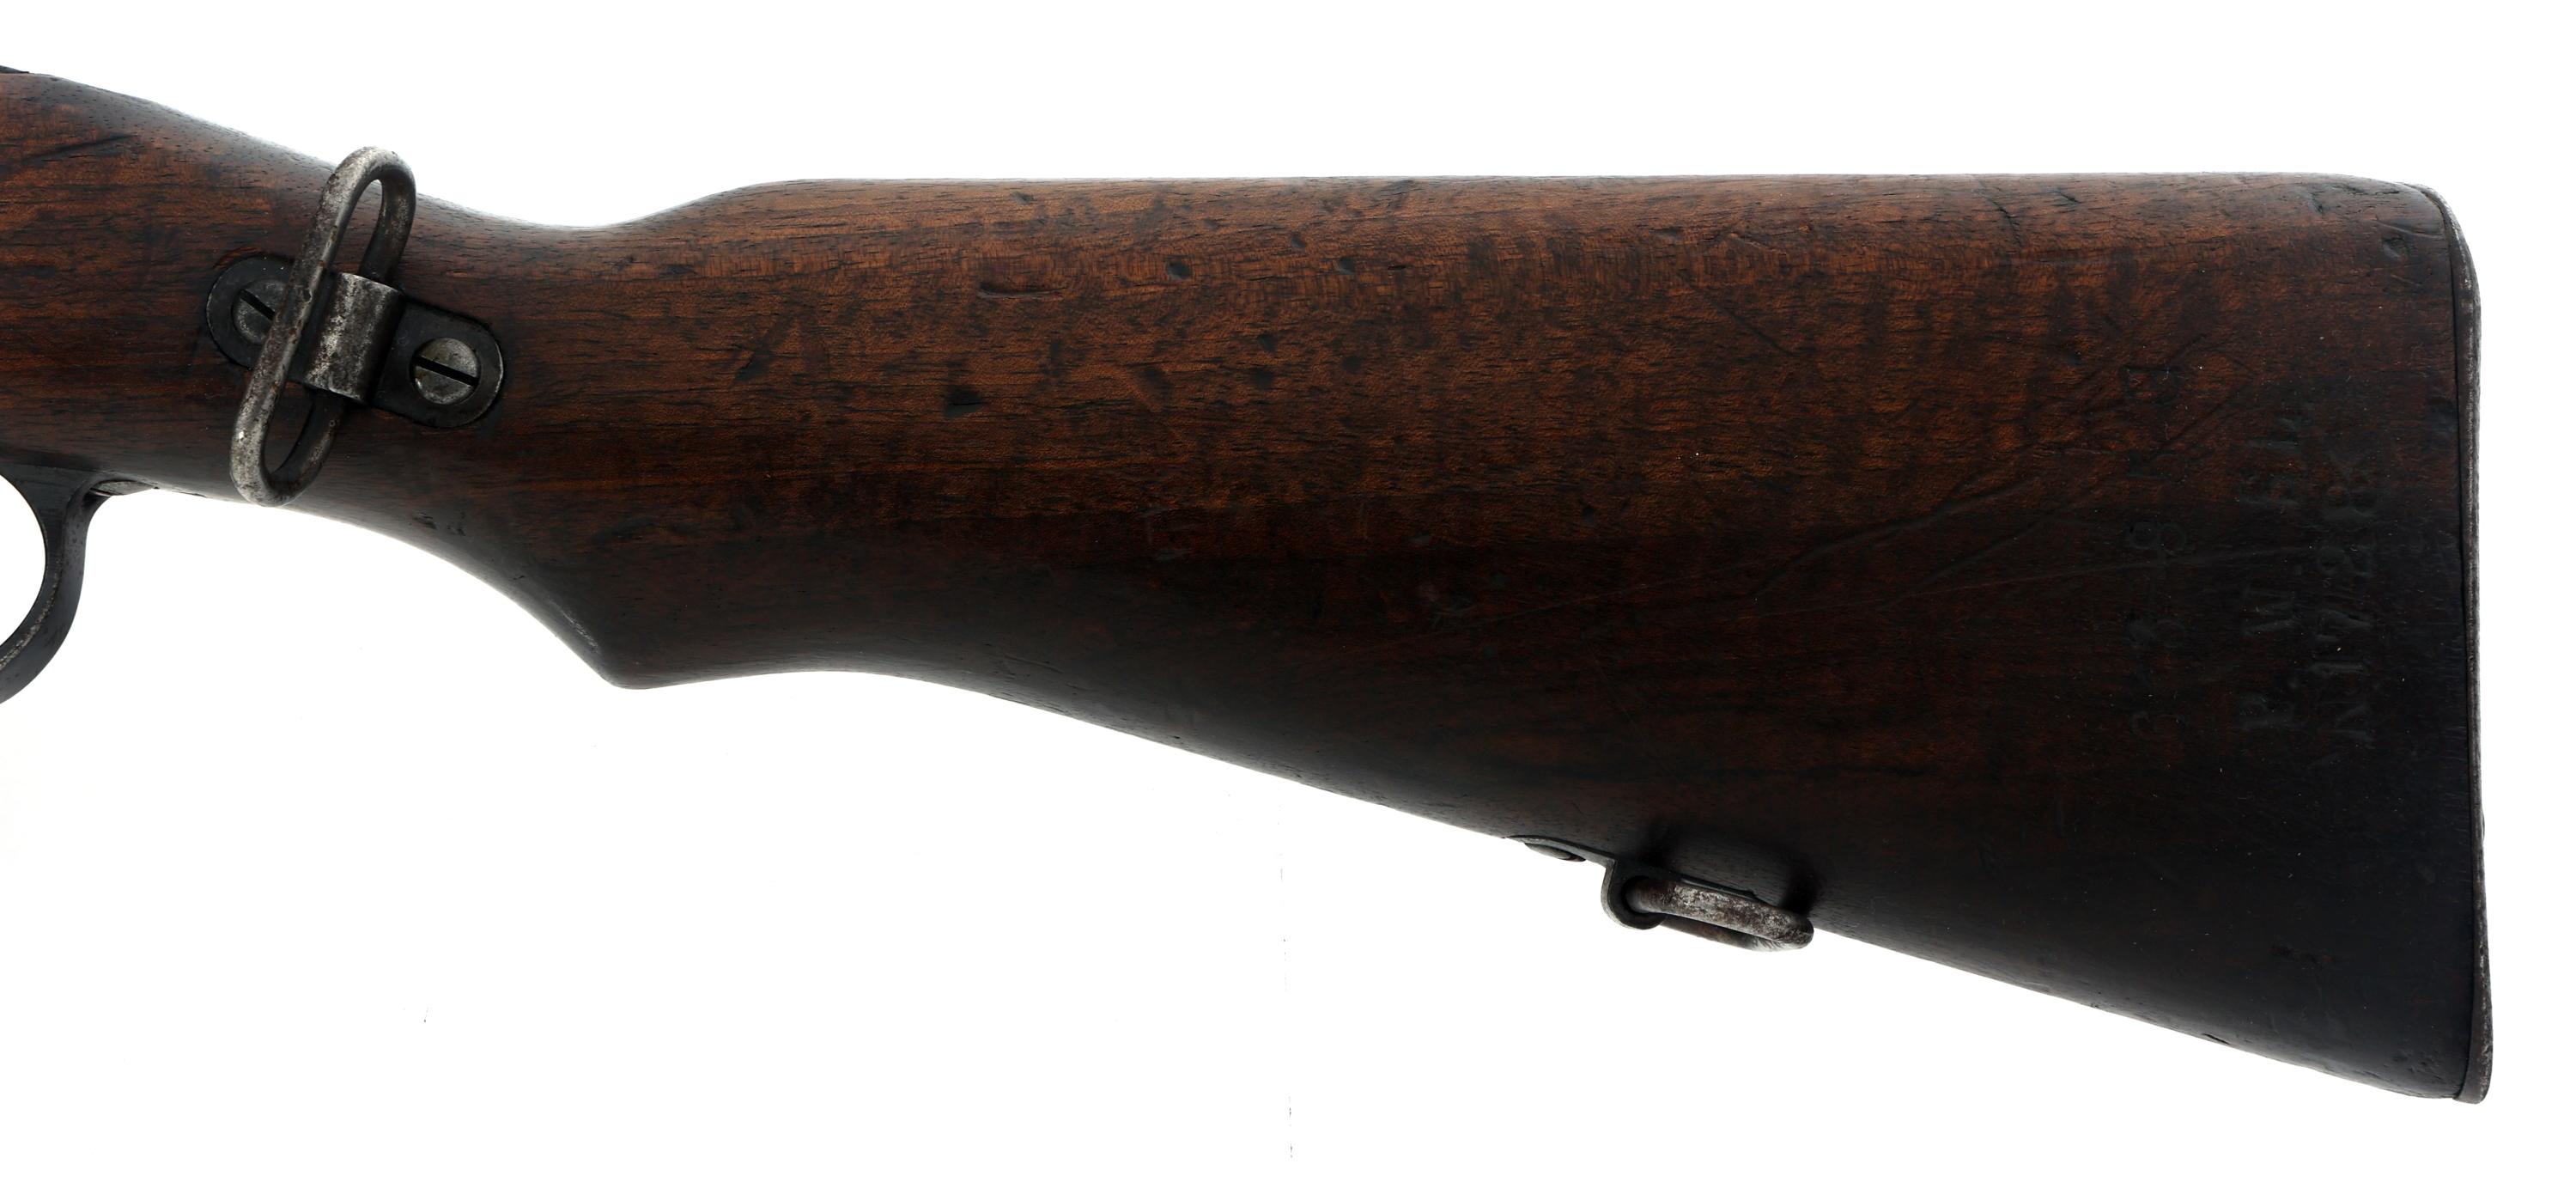 POLISH STEYR MODEL 1895 8mm CALIBER CARBINE